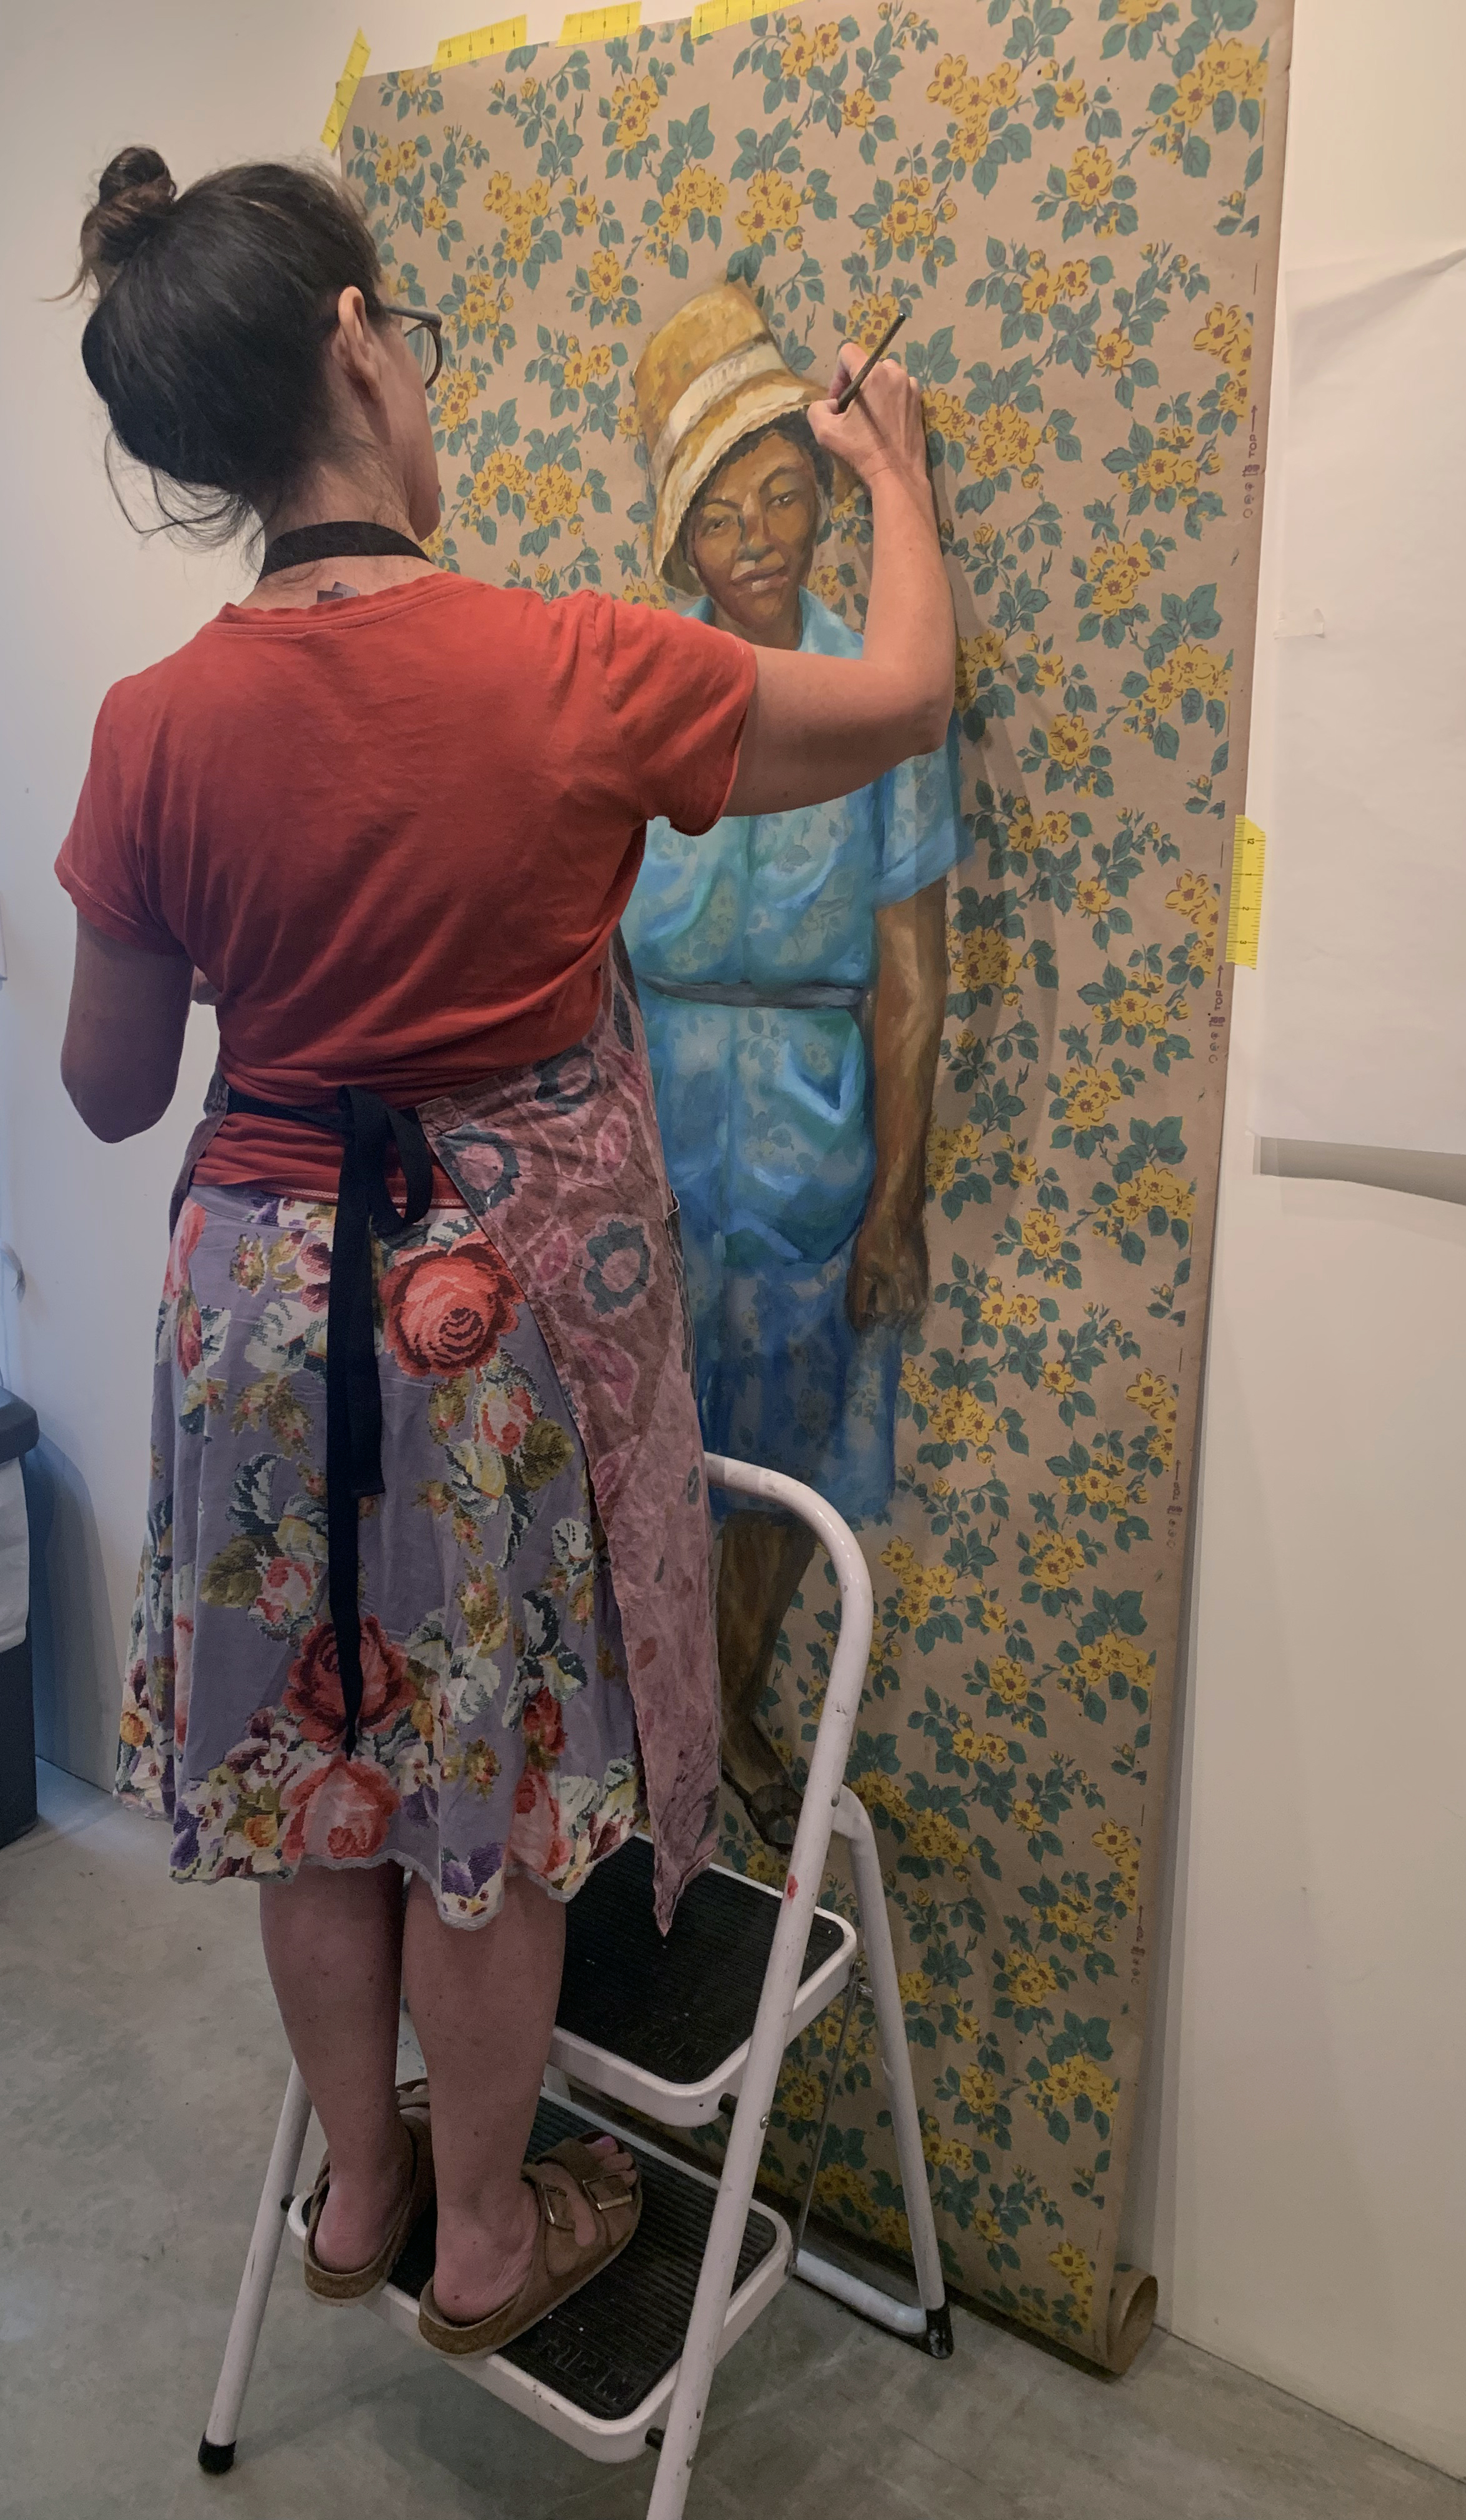 Lianne preparing for an exhibition